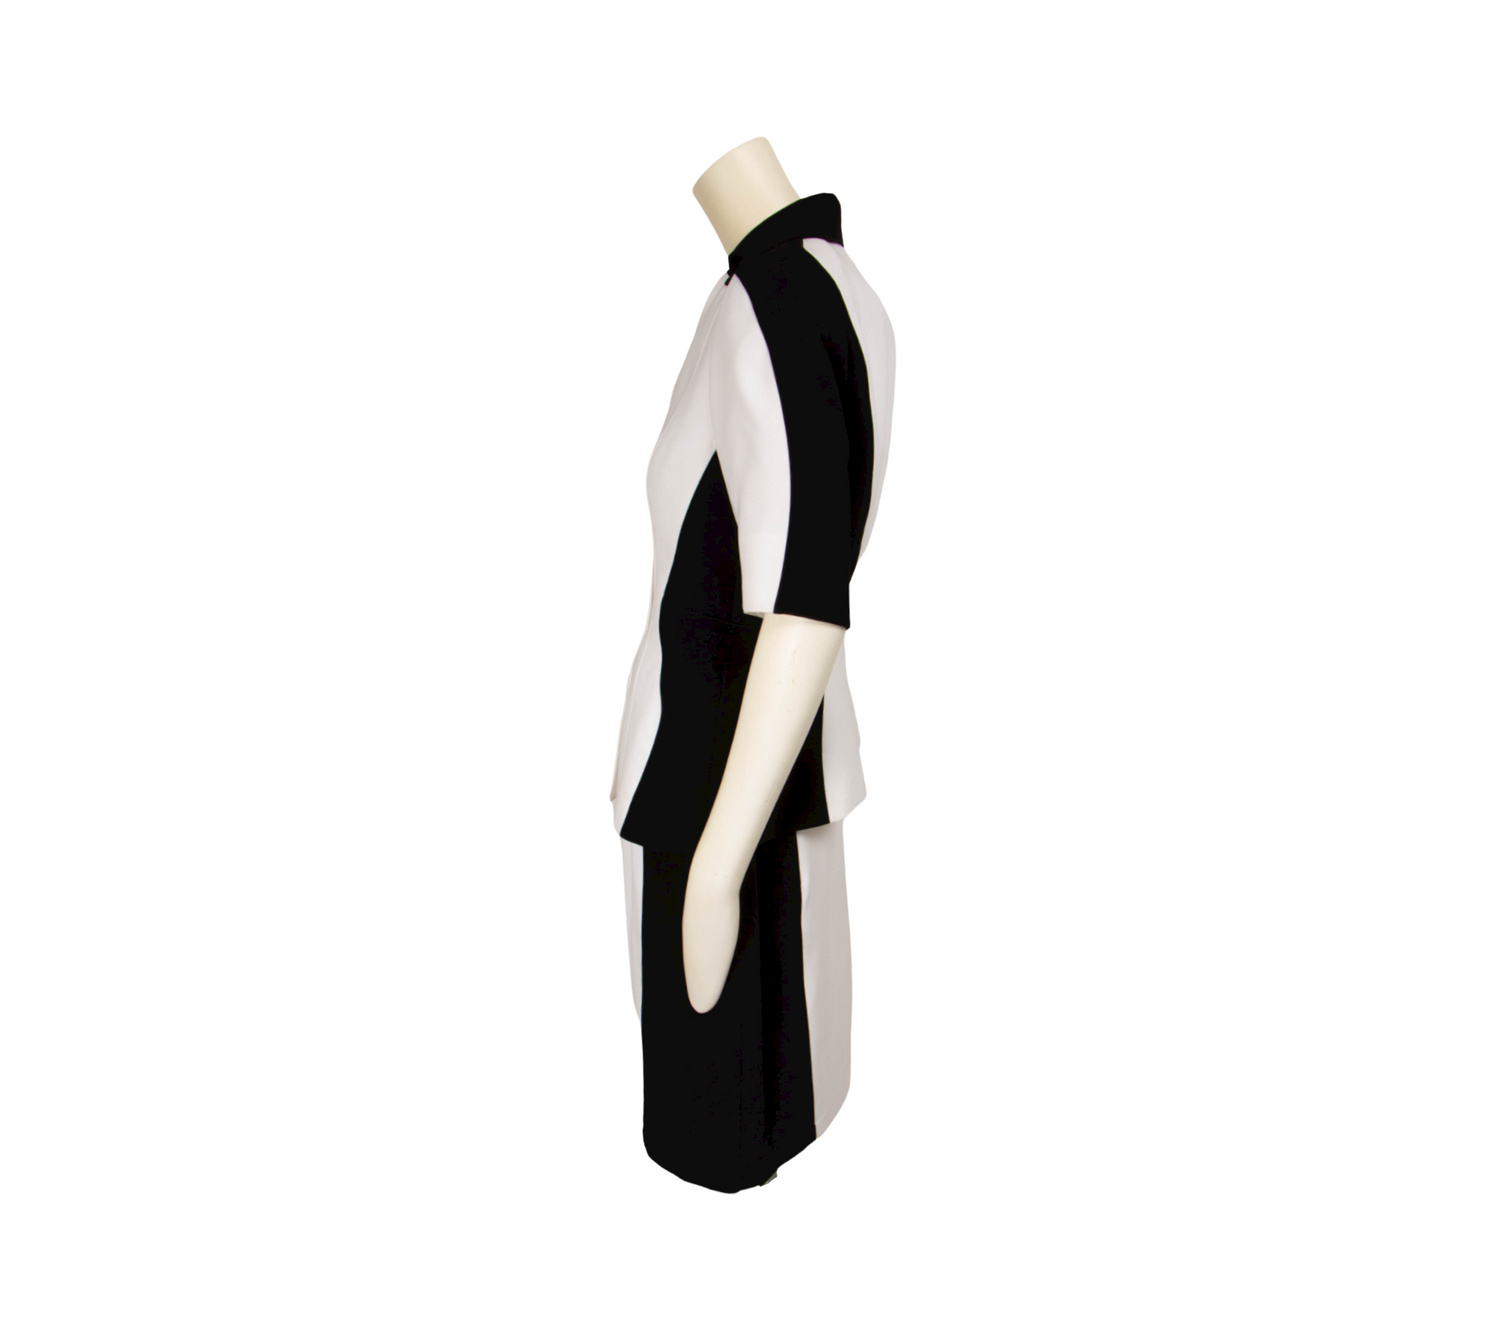 Thierry Mugler vintage white and black skirt ensemble - S - 1990s